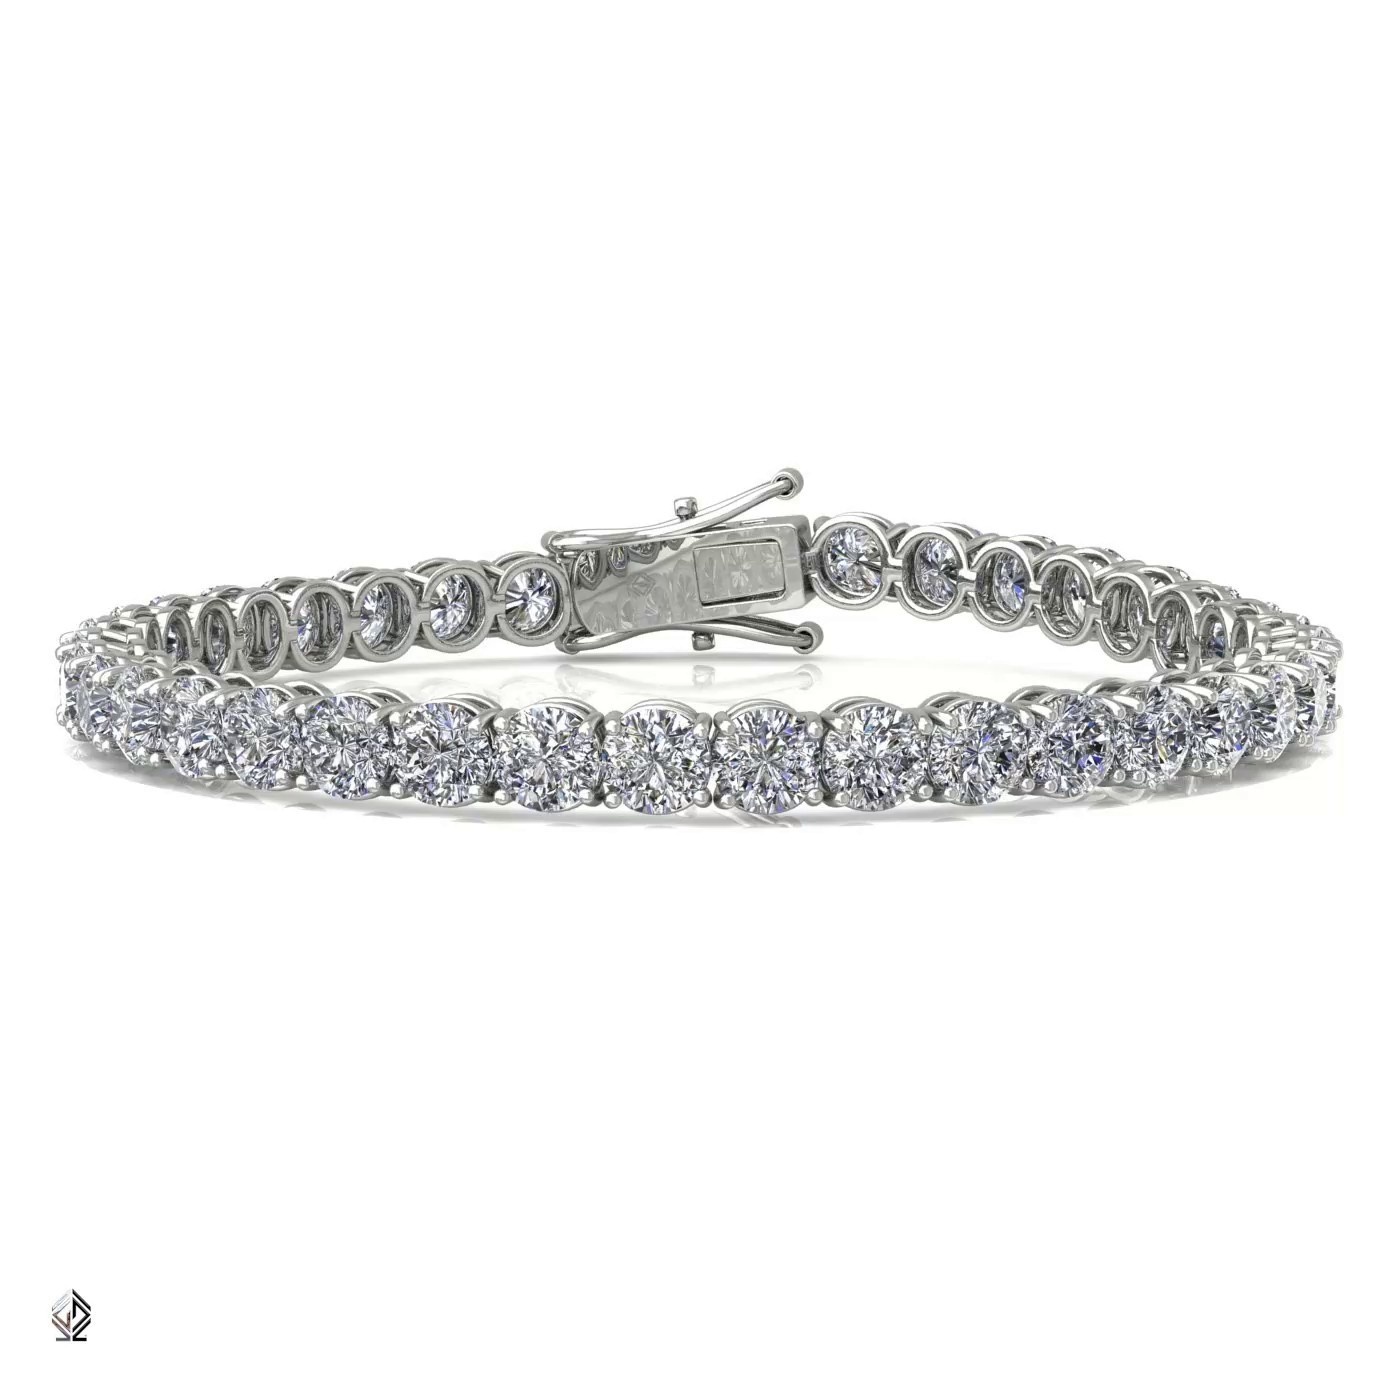 18k white gold 1.8mm 4 prong round shape diamond tennis bracelet in round setting Photos & images